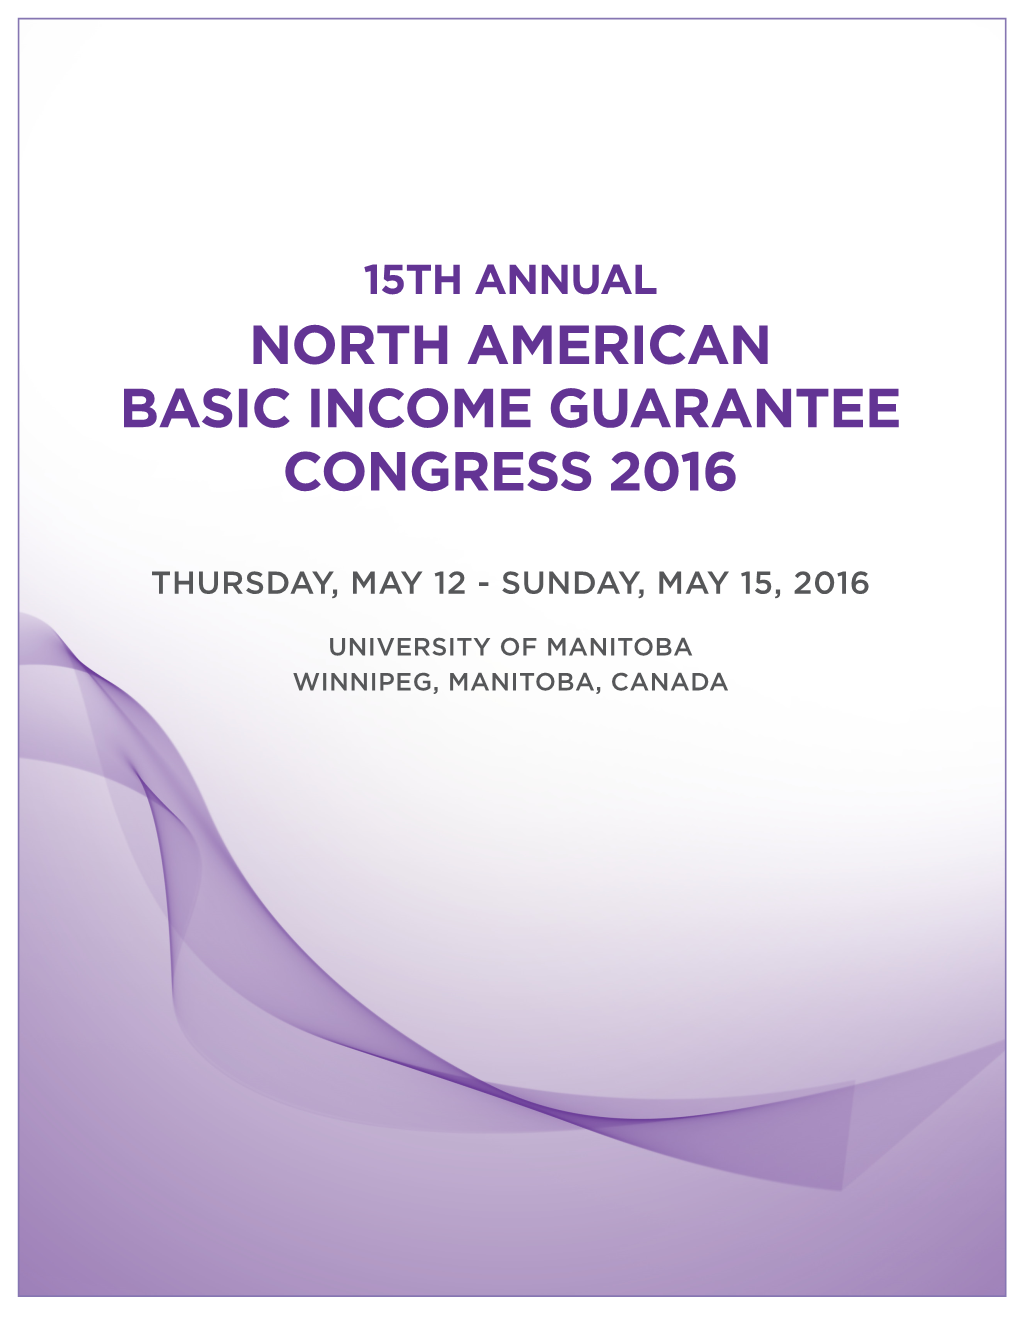 North American Basic Income Guarantee Congress 2016